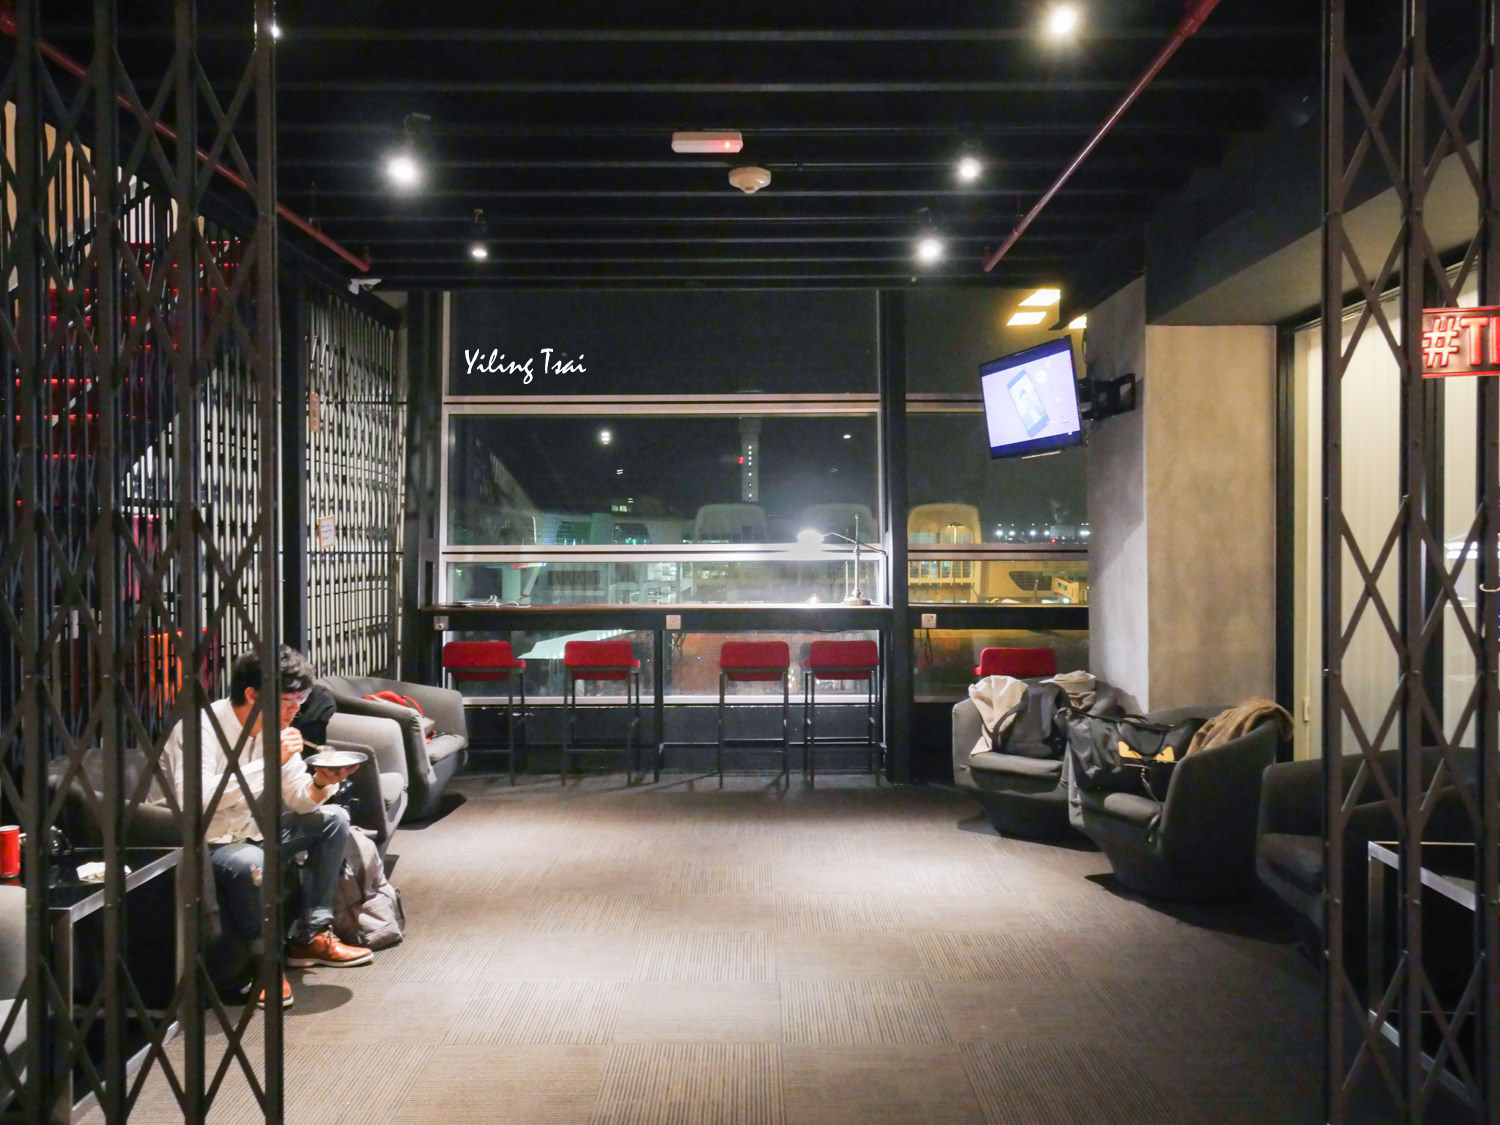 AirAsia 台北到雪梨飛行紀錄 亞航尊榮紅色貴賓室 Red Lounge